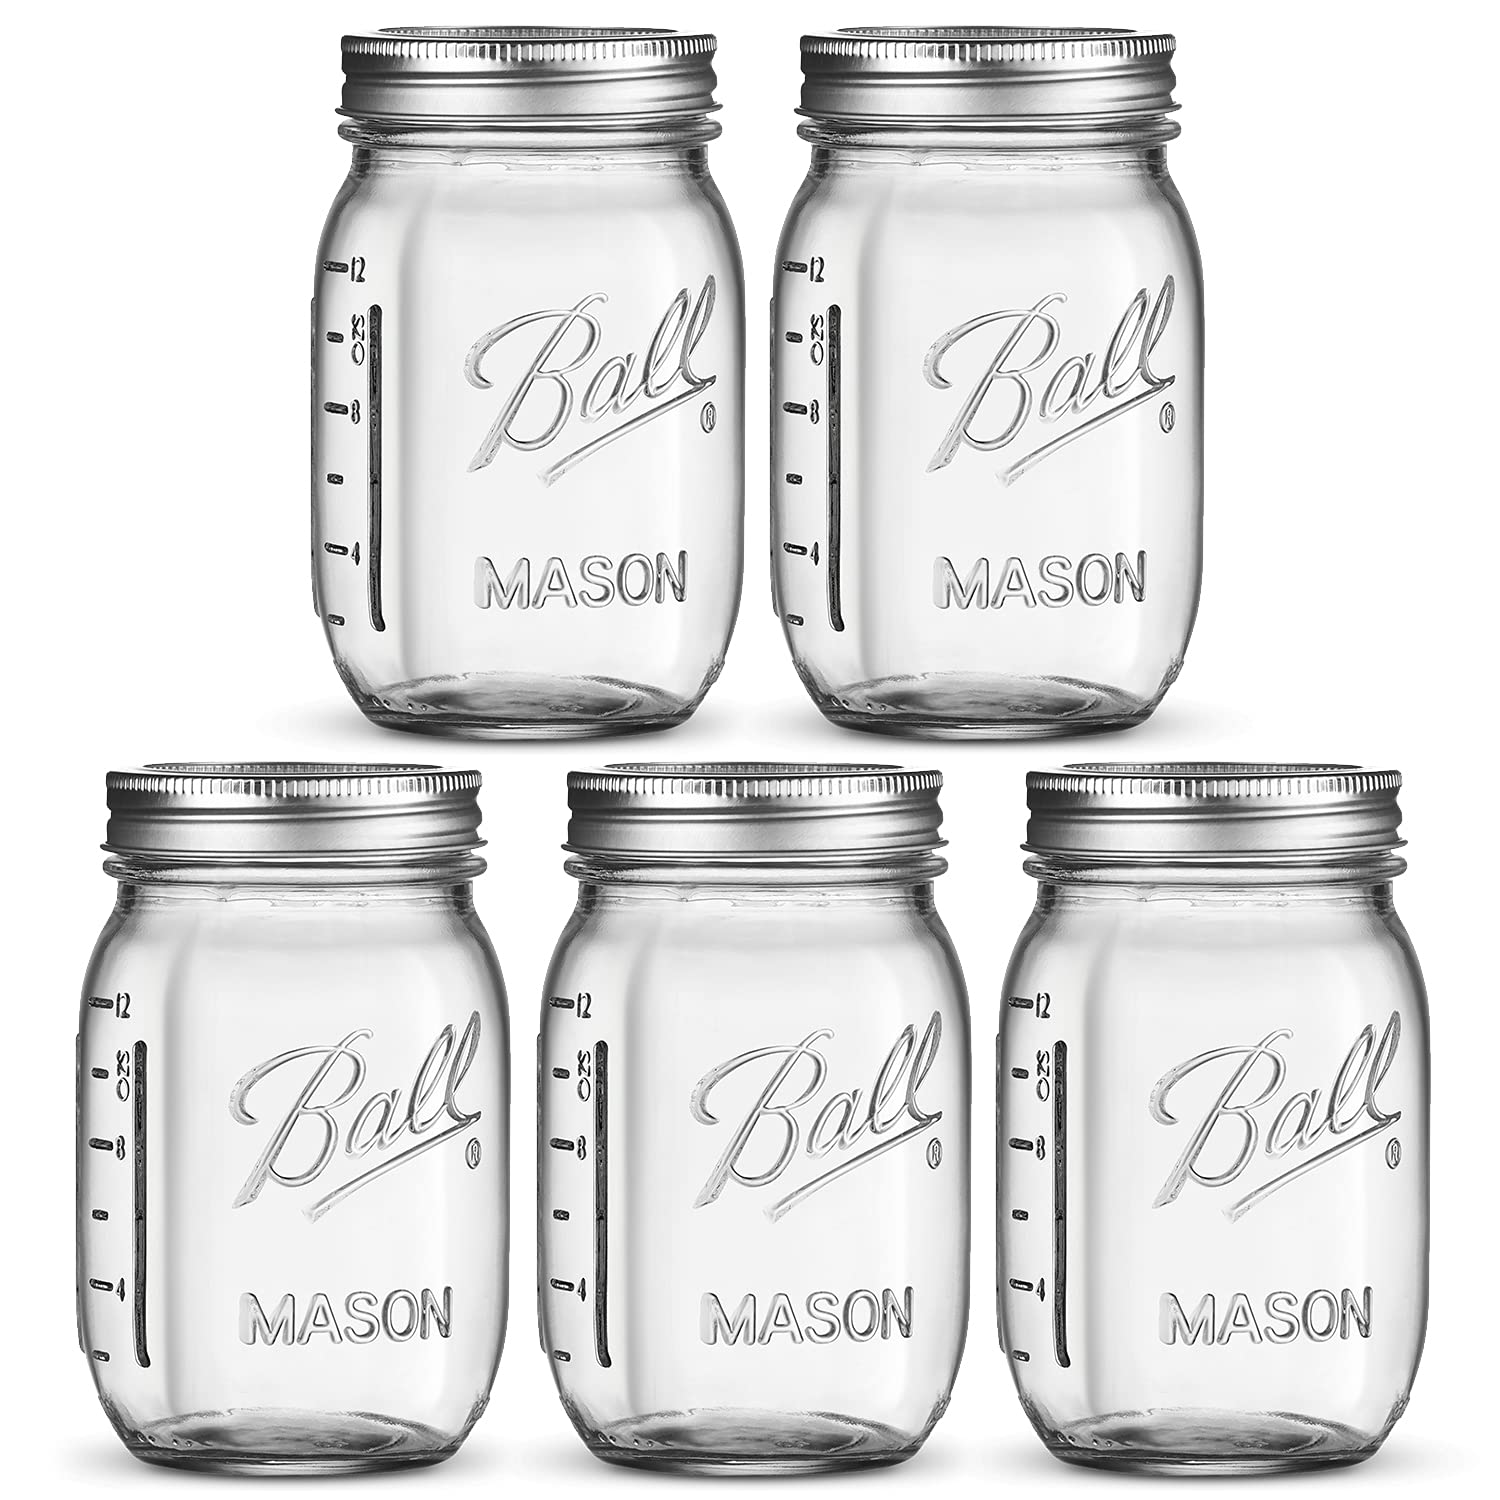 Sewanta Ball Regular Mouth Mason Jars 16 oz 5 Pack] With mason jar lids and Bands, Ball mason jars 16 oz - For canning, Fermenting, Pick